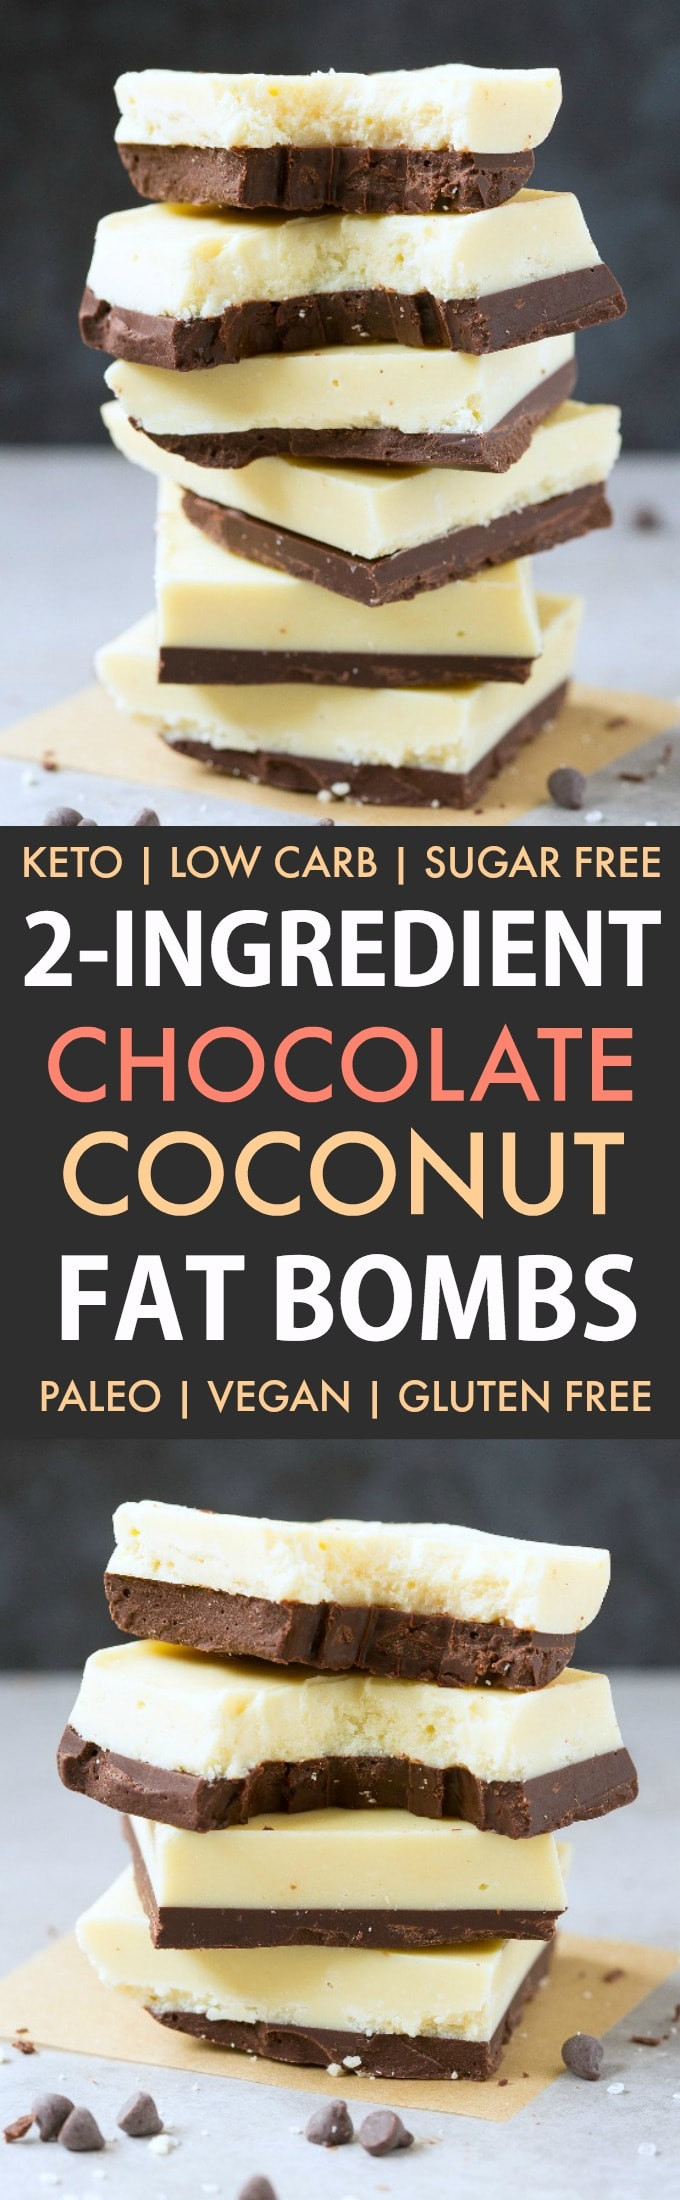 Low Fat Keto Recipes Low Carb Keto Chocolate Coconut Fat Bombs Paleo Vegan